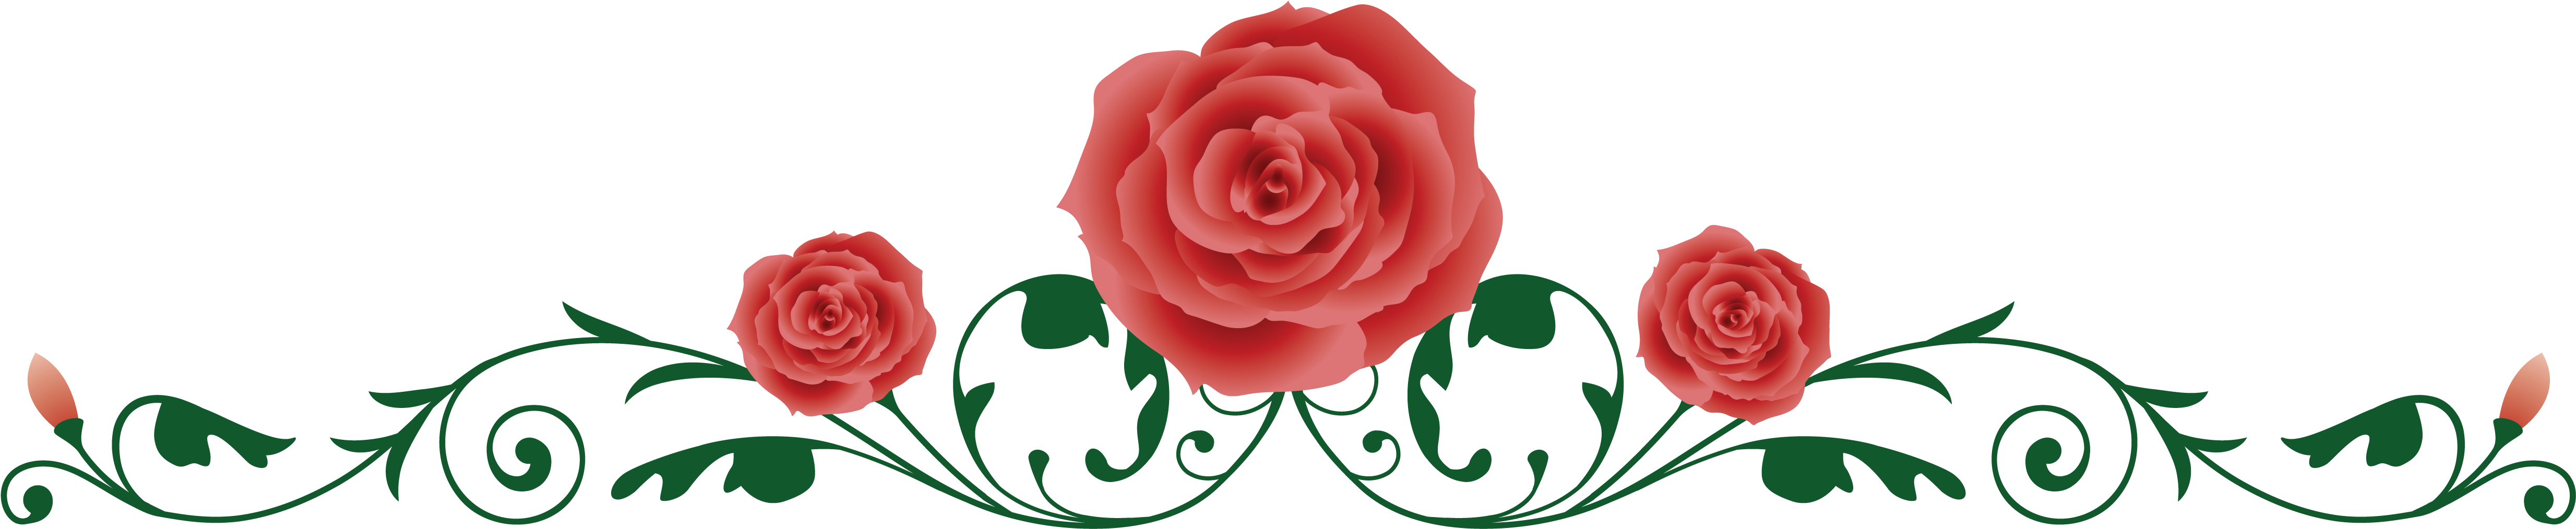 Rose Vine Thorns, Spines, And Prickles Clip Art - Red Rose Vine Border (5206x1143)